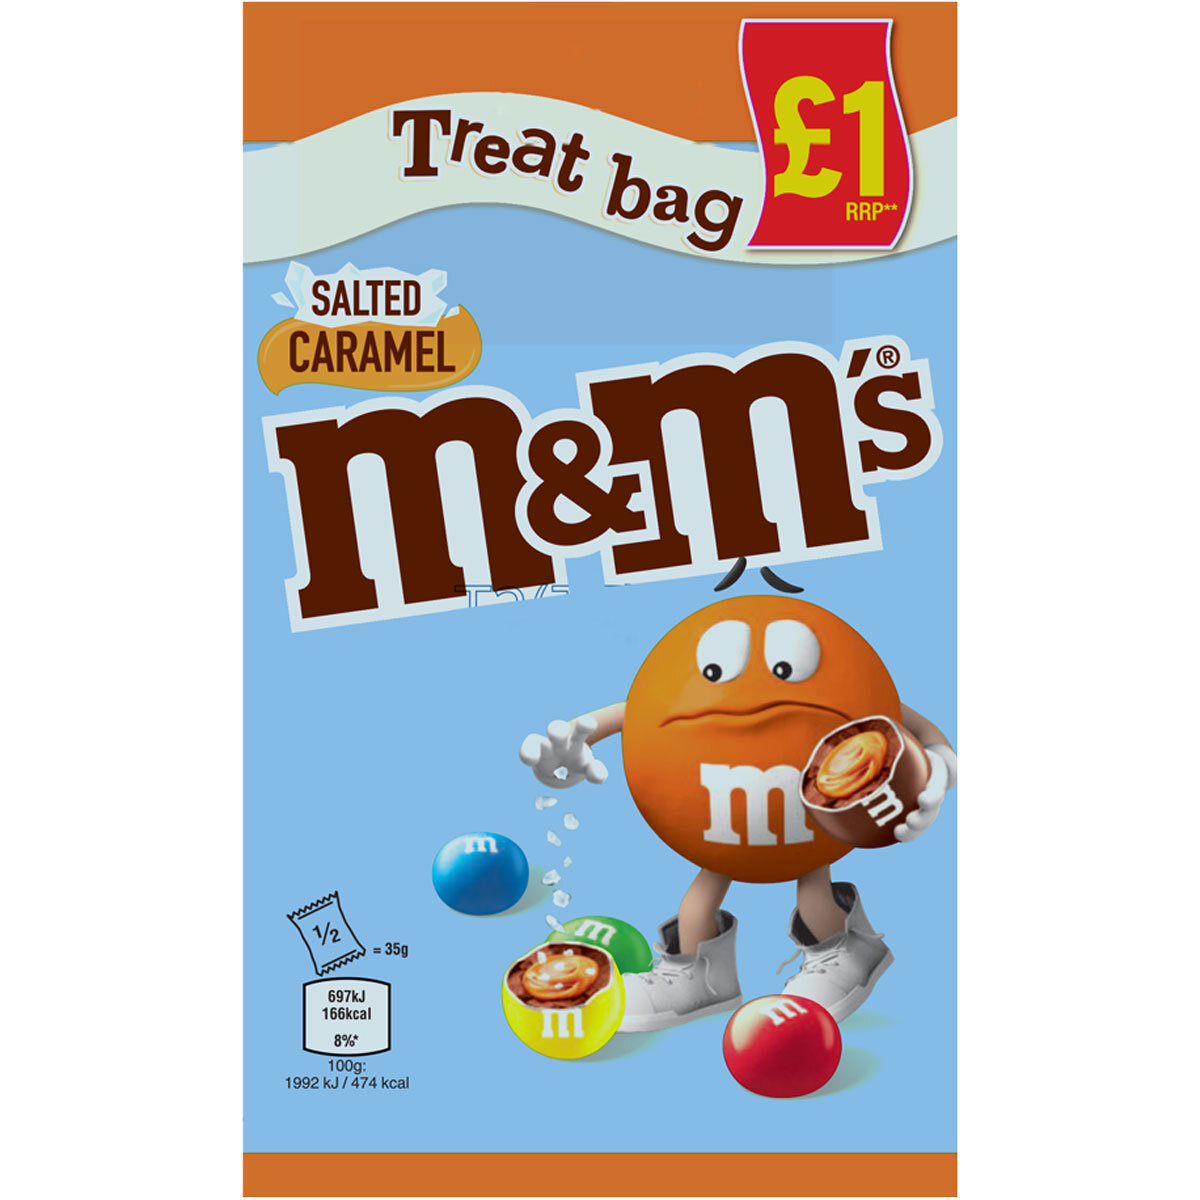 M&M's Crispy Chocolate Treat Bag PMP 77g (Box of 16)